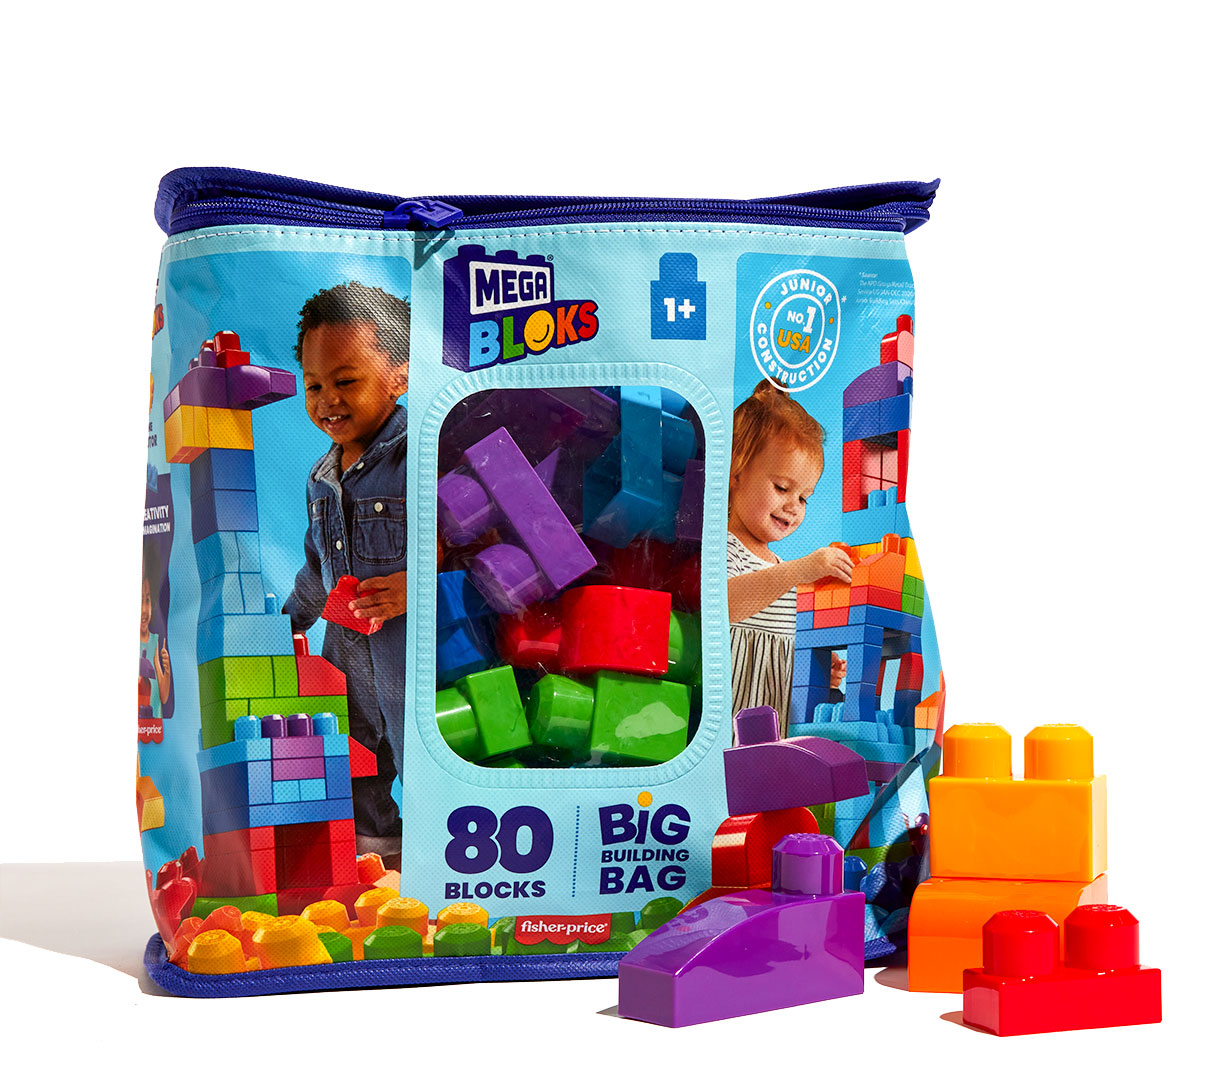 Cool Bath Toys for Kids - Chicago Parent